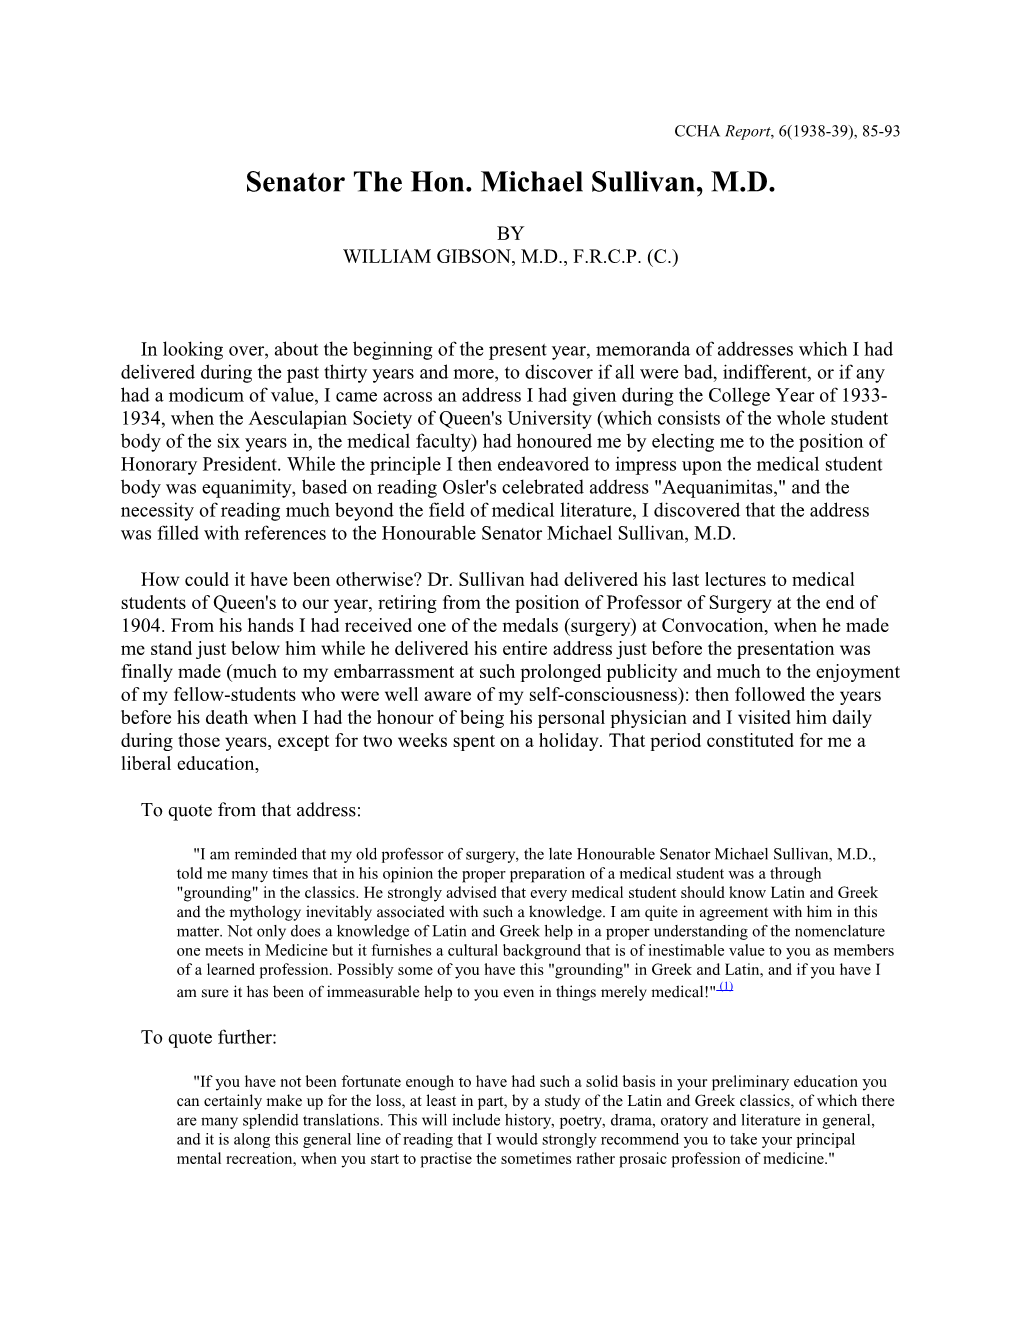 Senator the Hon. Michael Sullivan, M.D